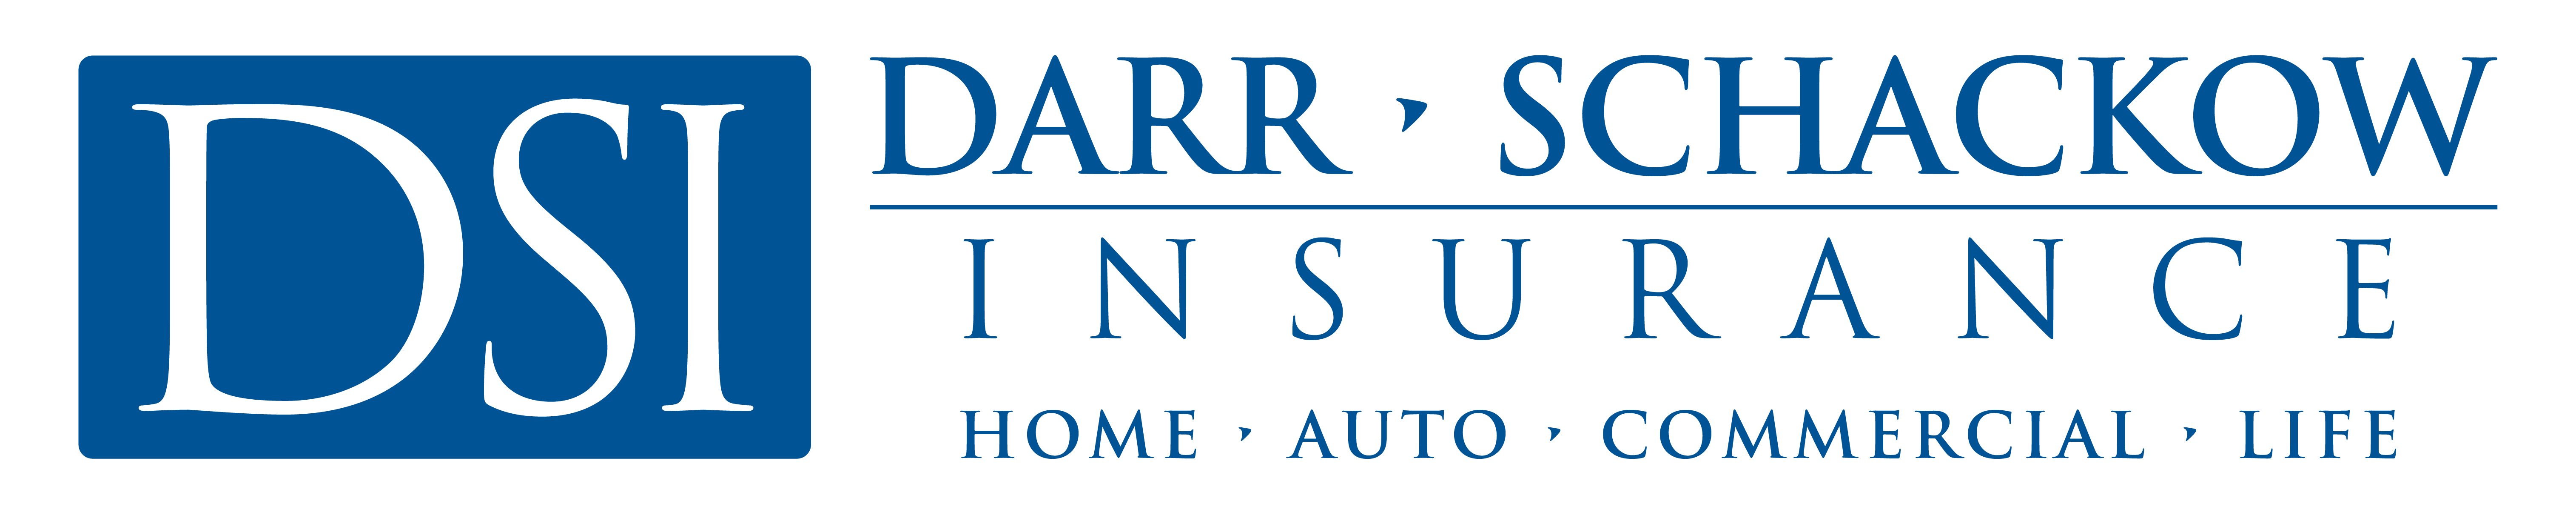 Darr Schackow Insurance Logo